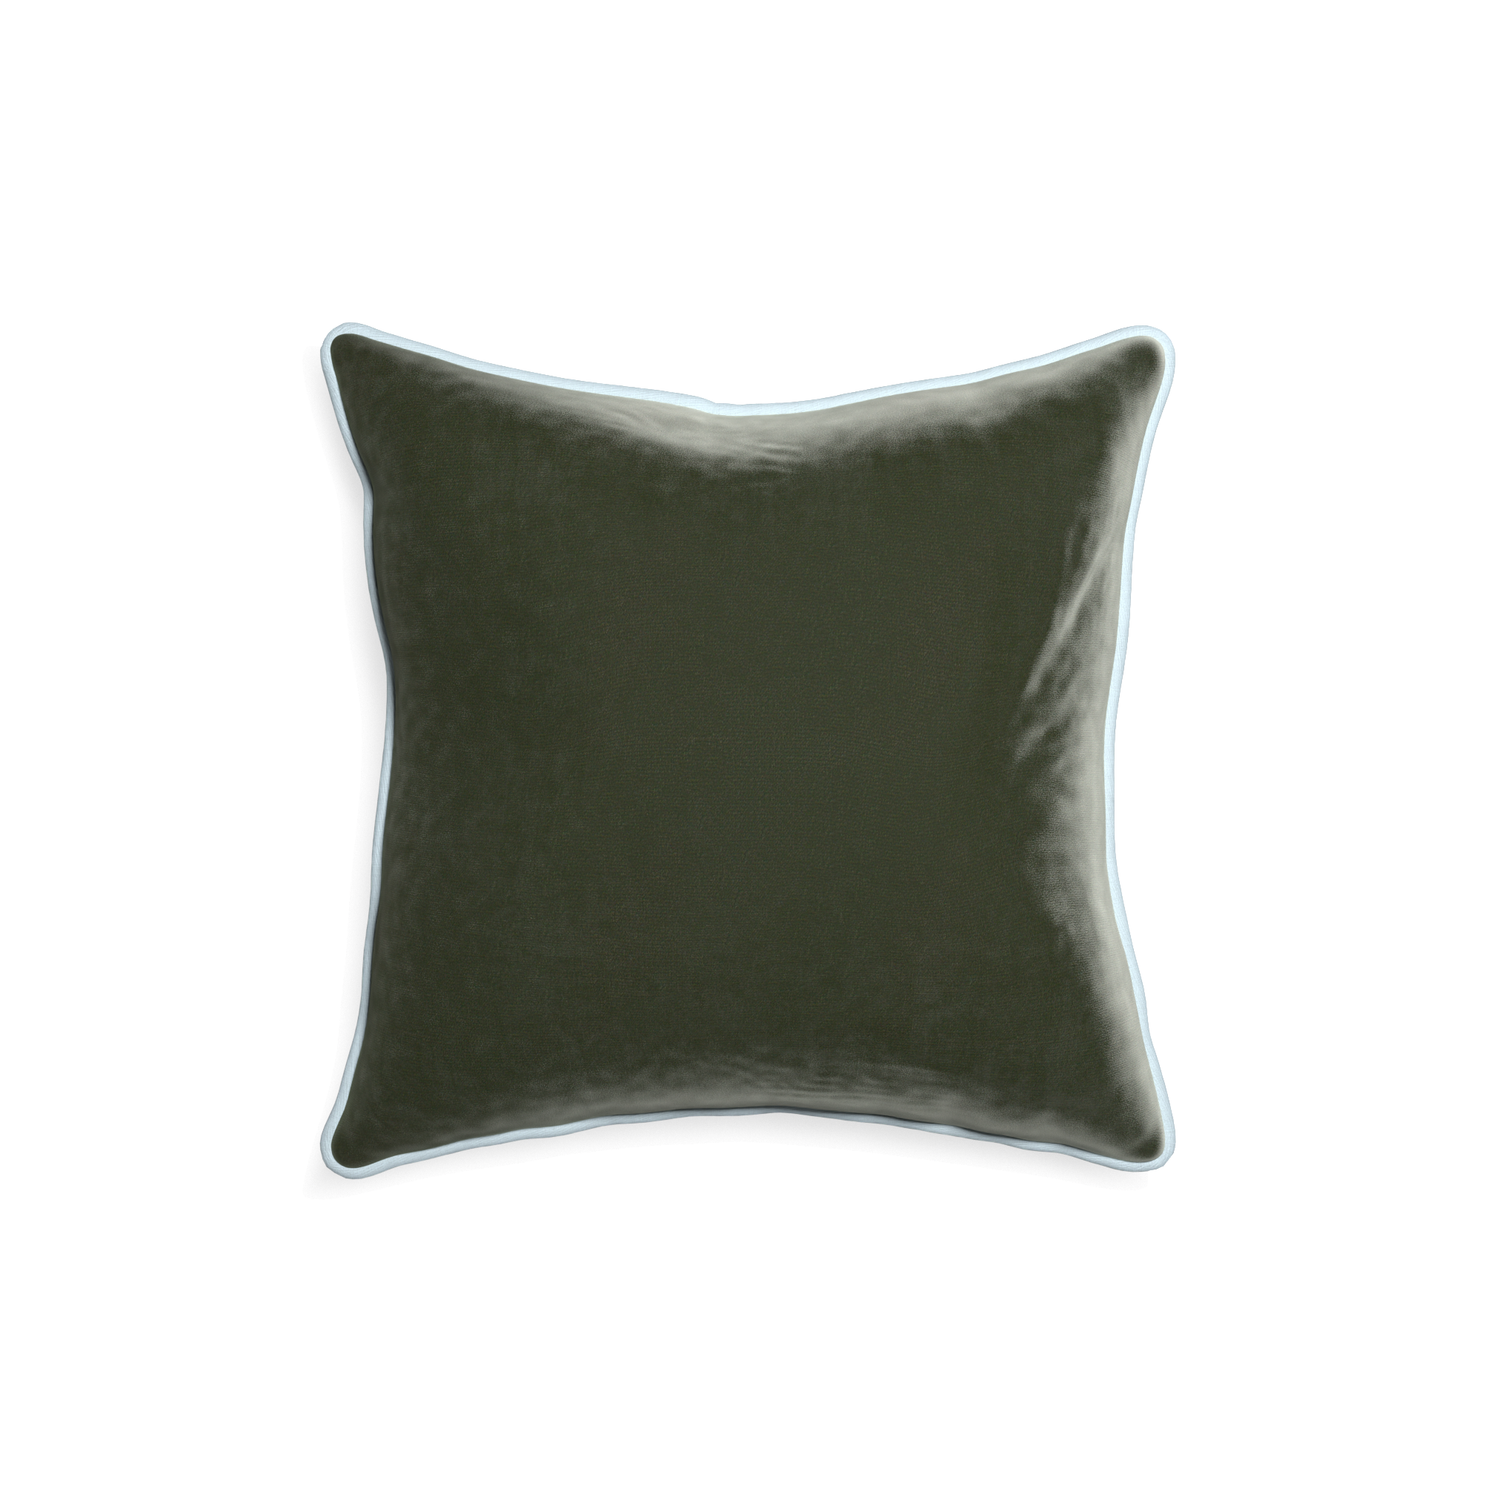 square fern green velvet pillow with light blue piping